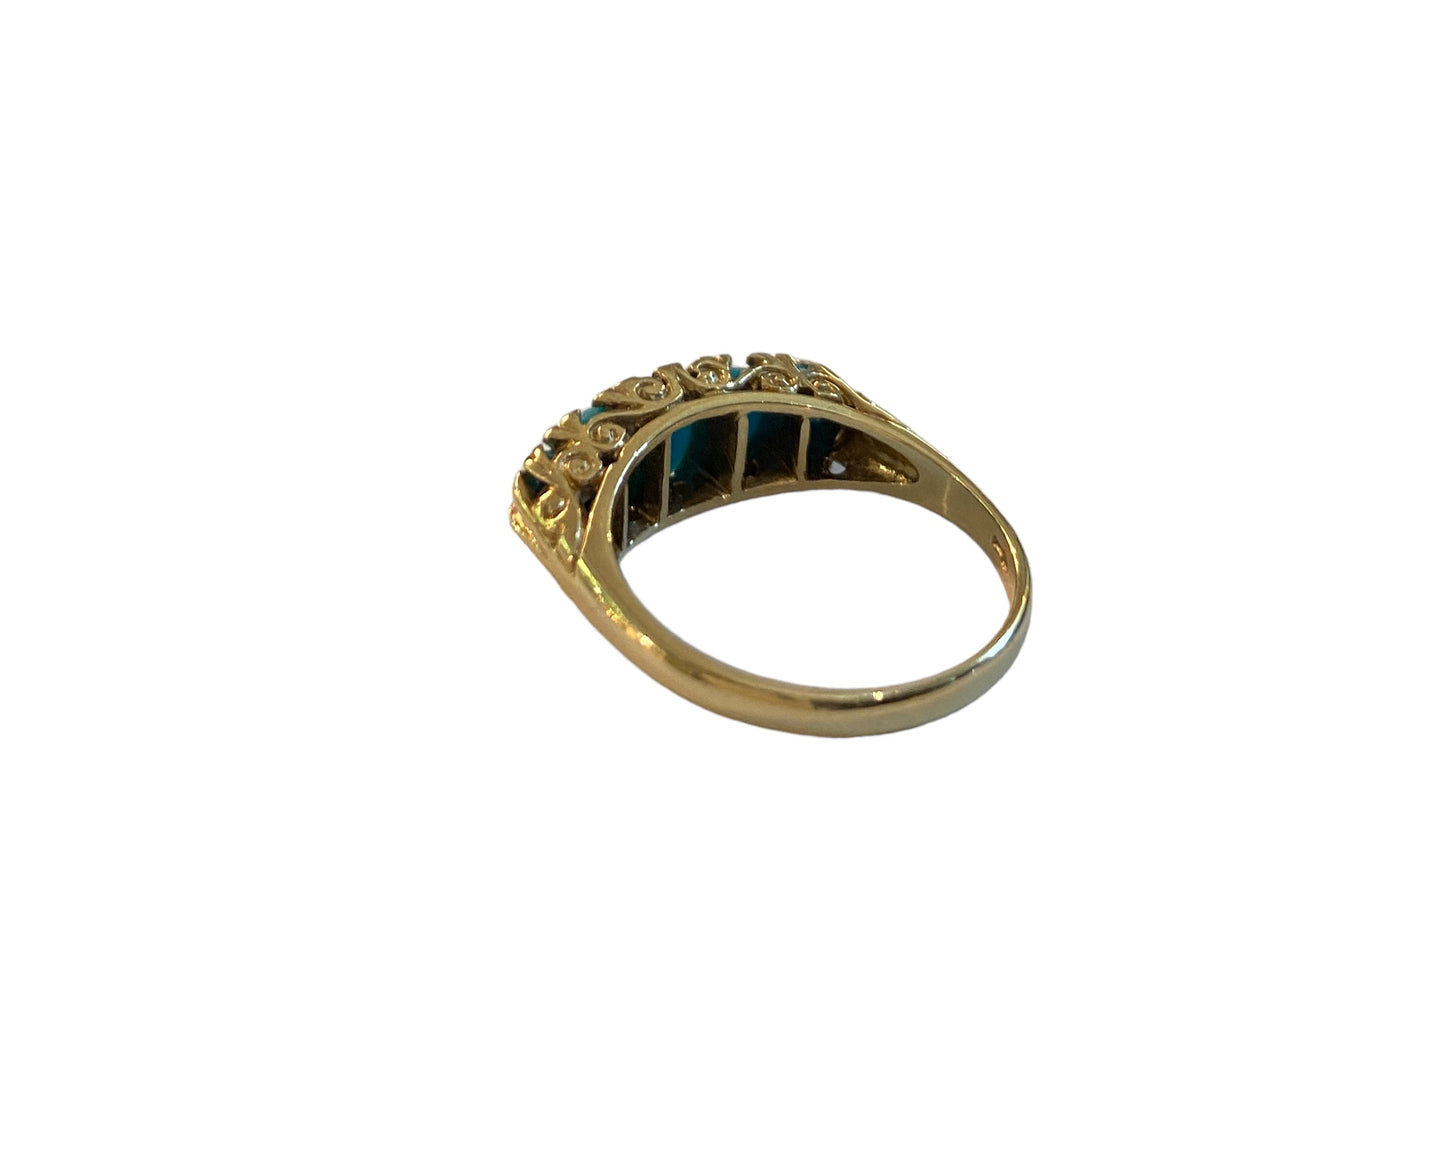 9ct vintage turquoise and diamond ring size O, circa 1947 Edinburgh